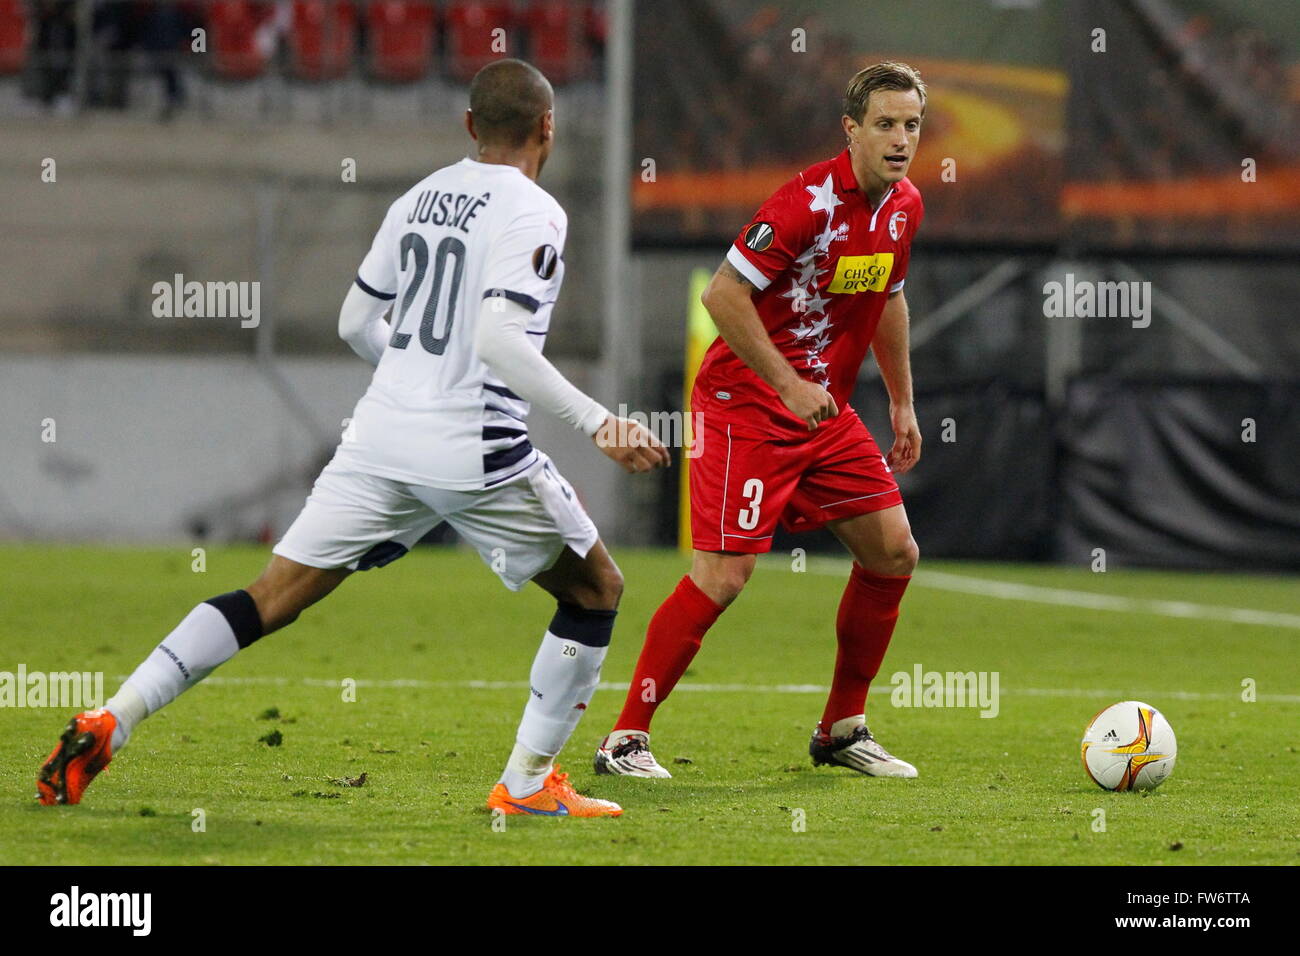 Reto Ziegler in action during the match Europa League Girondin Bordeaux - FC Sion at the Stadium Tourbillon Stock Photo